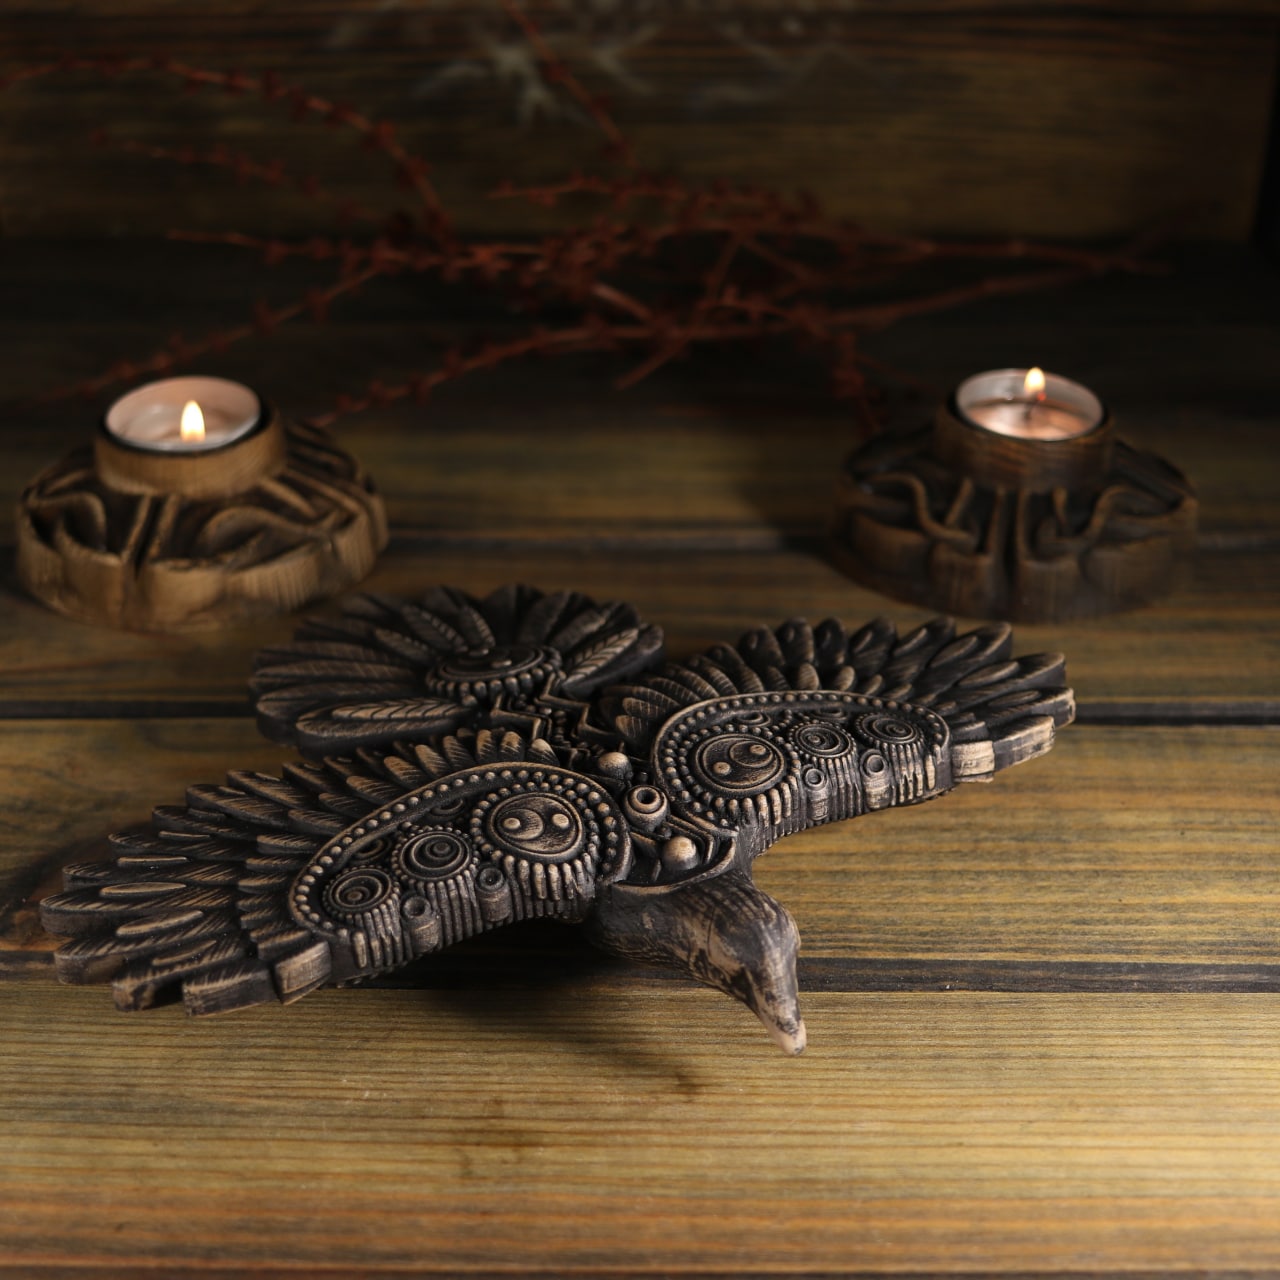 Raven, Norse mythology, wooden statue, wooden animal